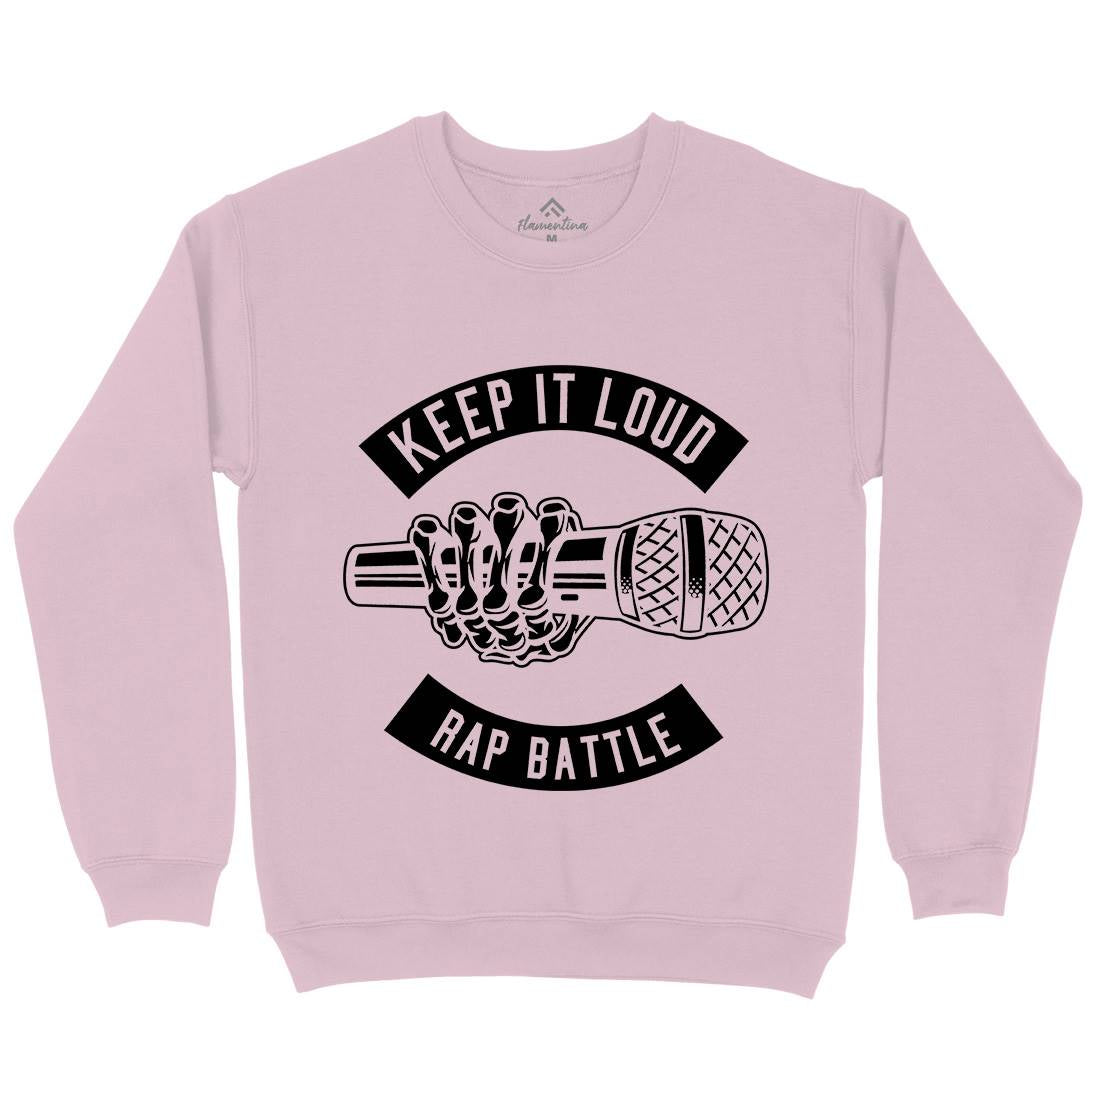 Keep It Loud Kids Crew Neck Sweatshirt Music B568